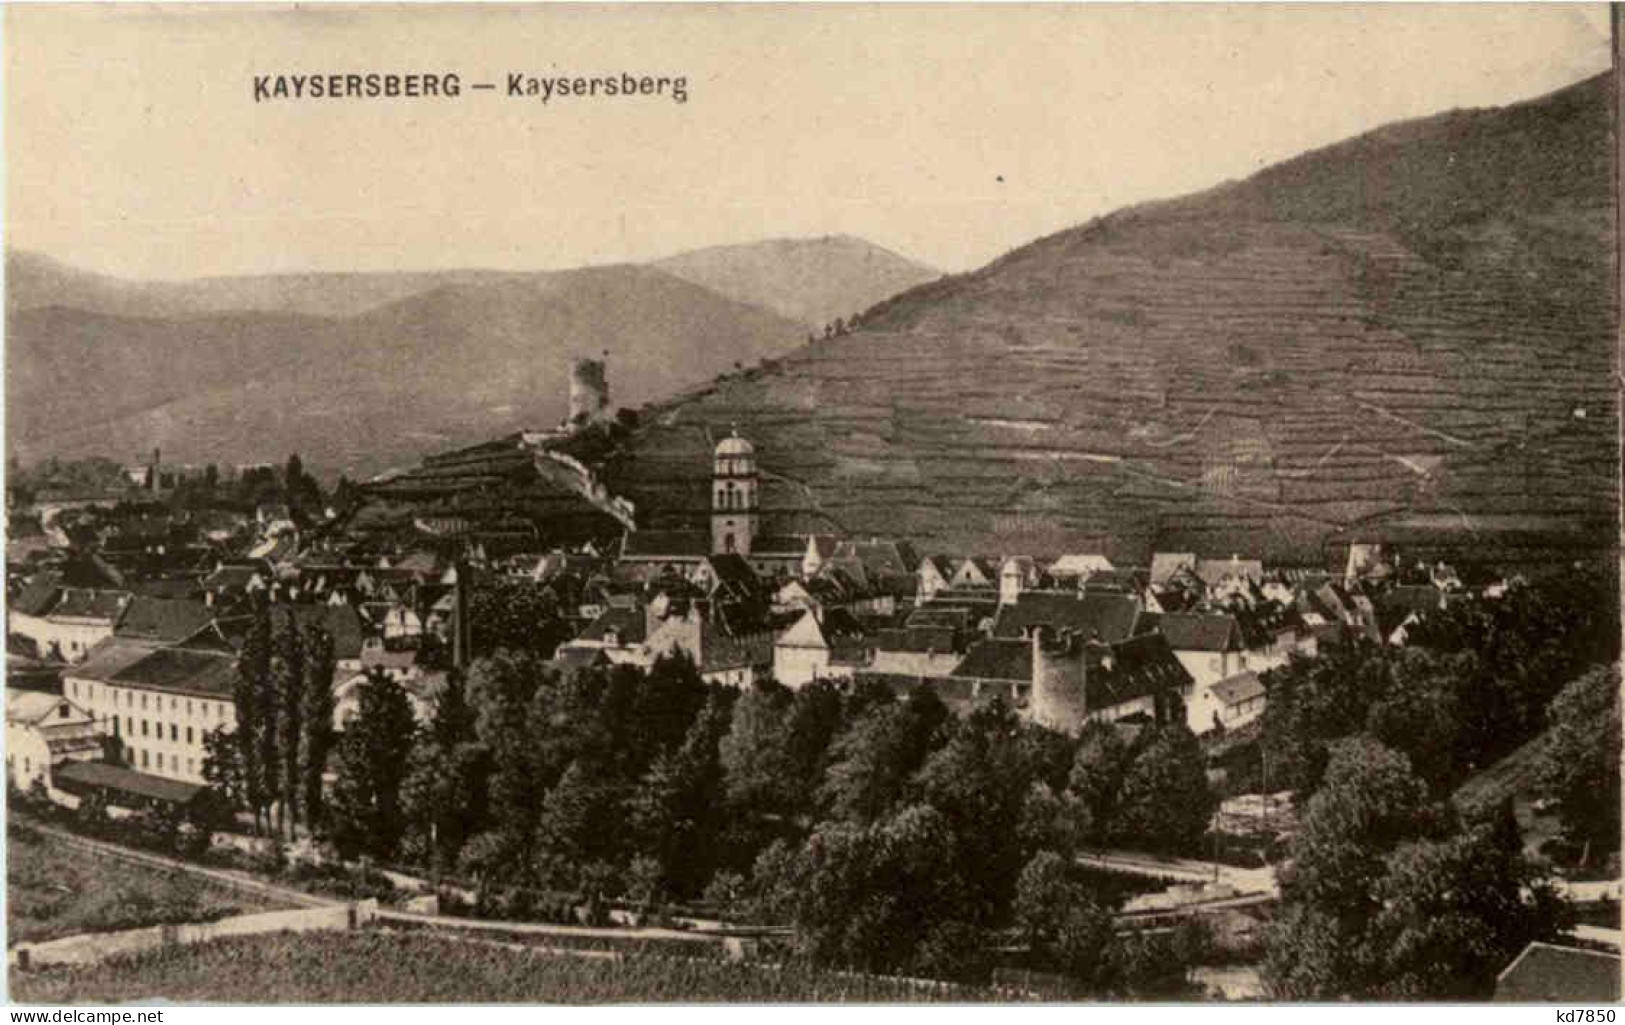 Kaysersberg - Kaysersberg